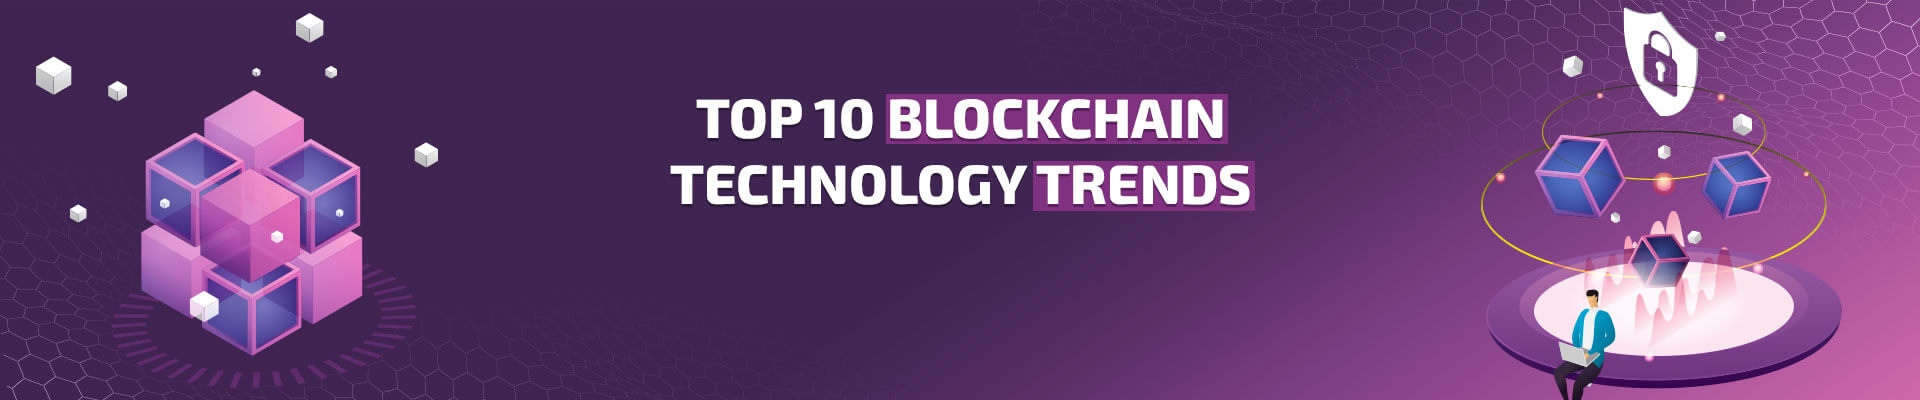 Top 10 Blockchain Technology Trends